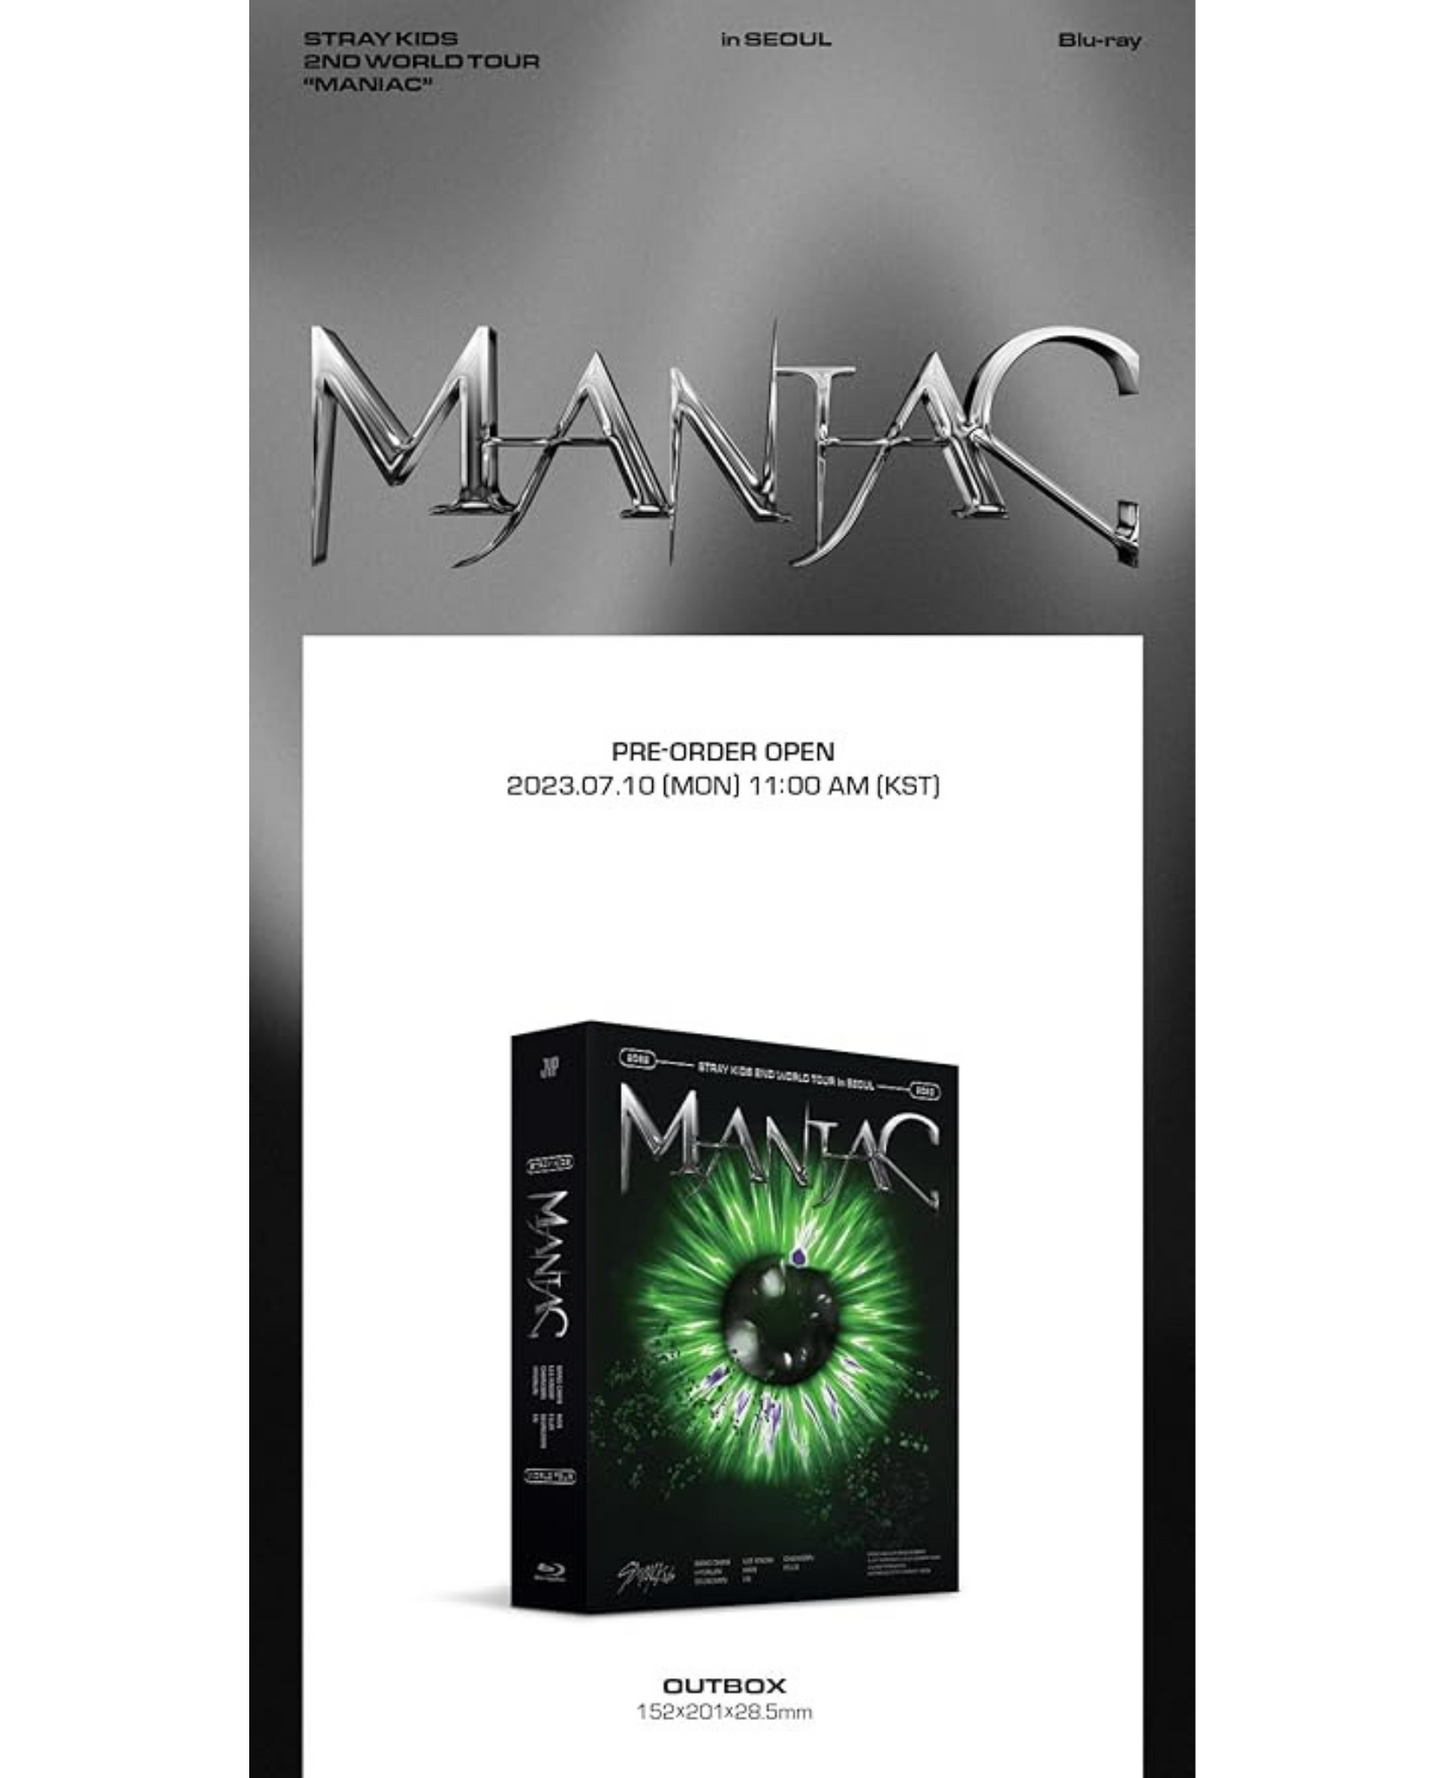 STRAY KIDS - 2nd World Tour “MANIAC” in Seoul (Blu-ray) – The Korner